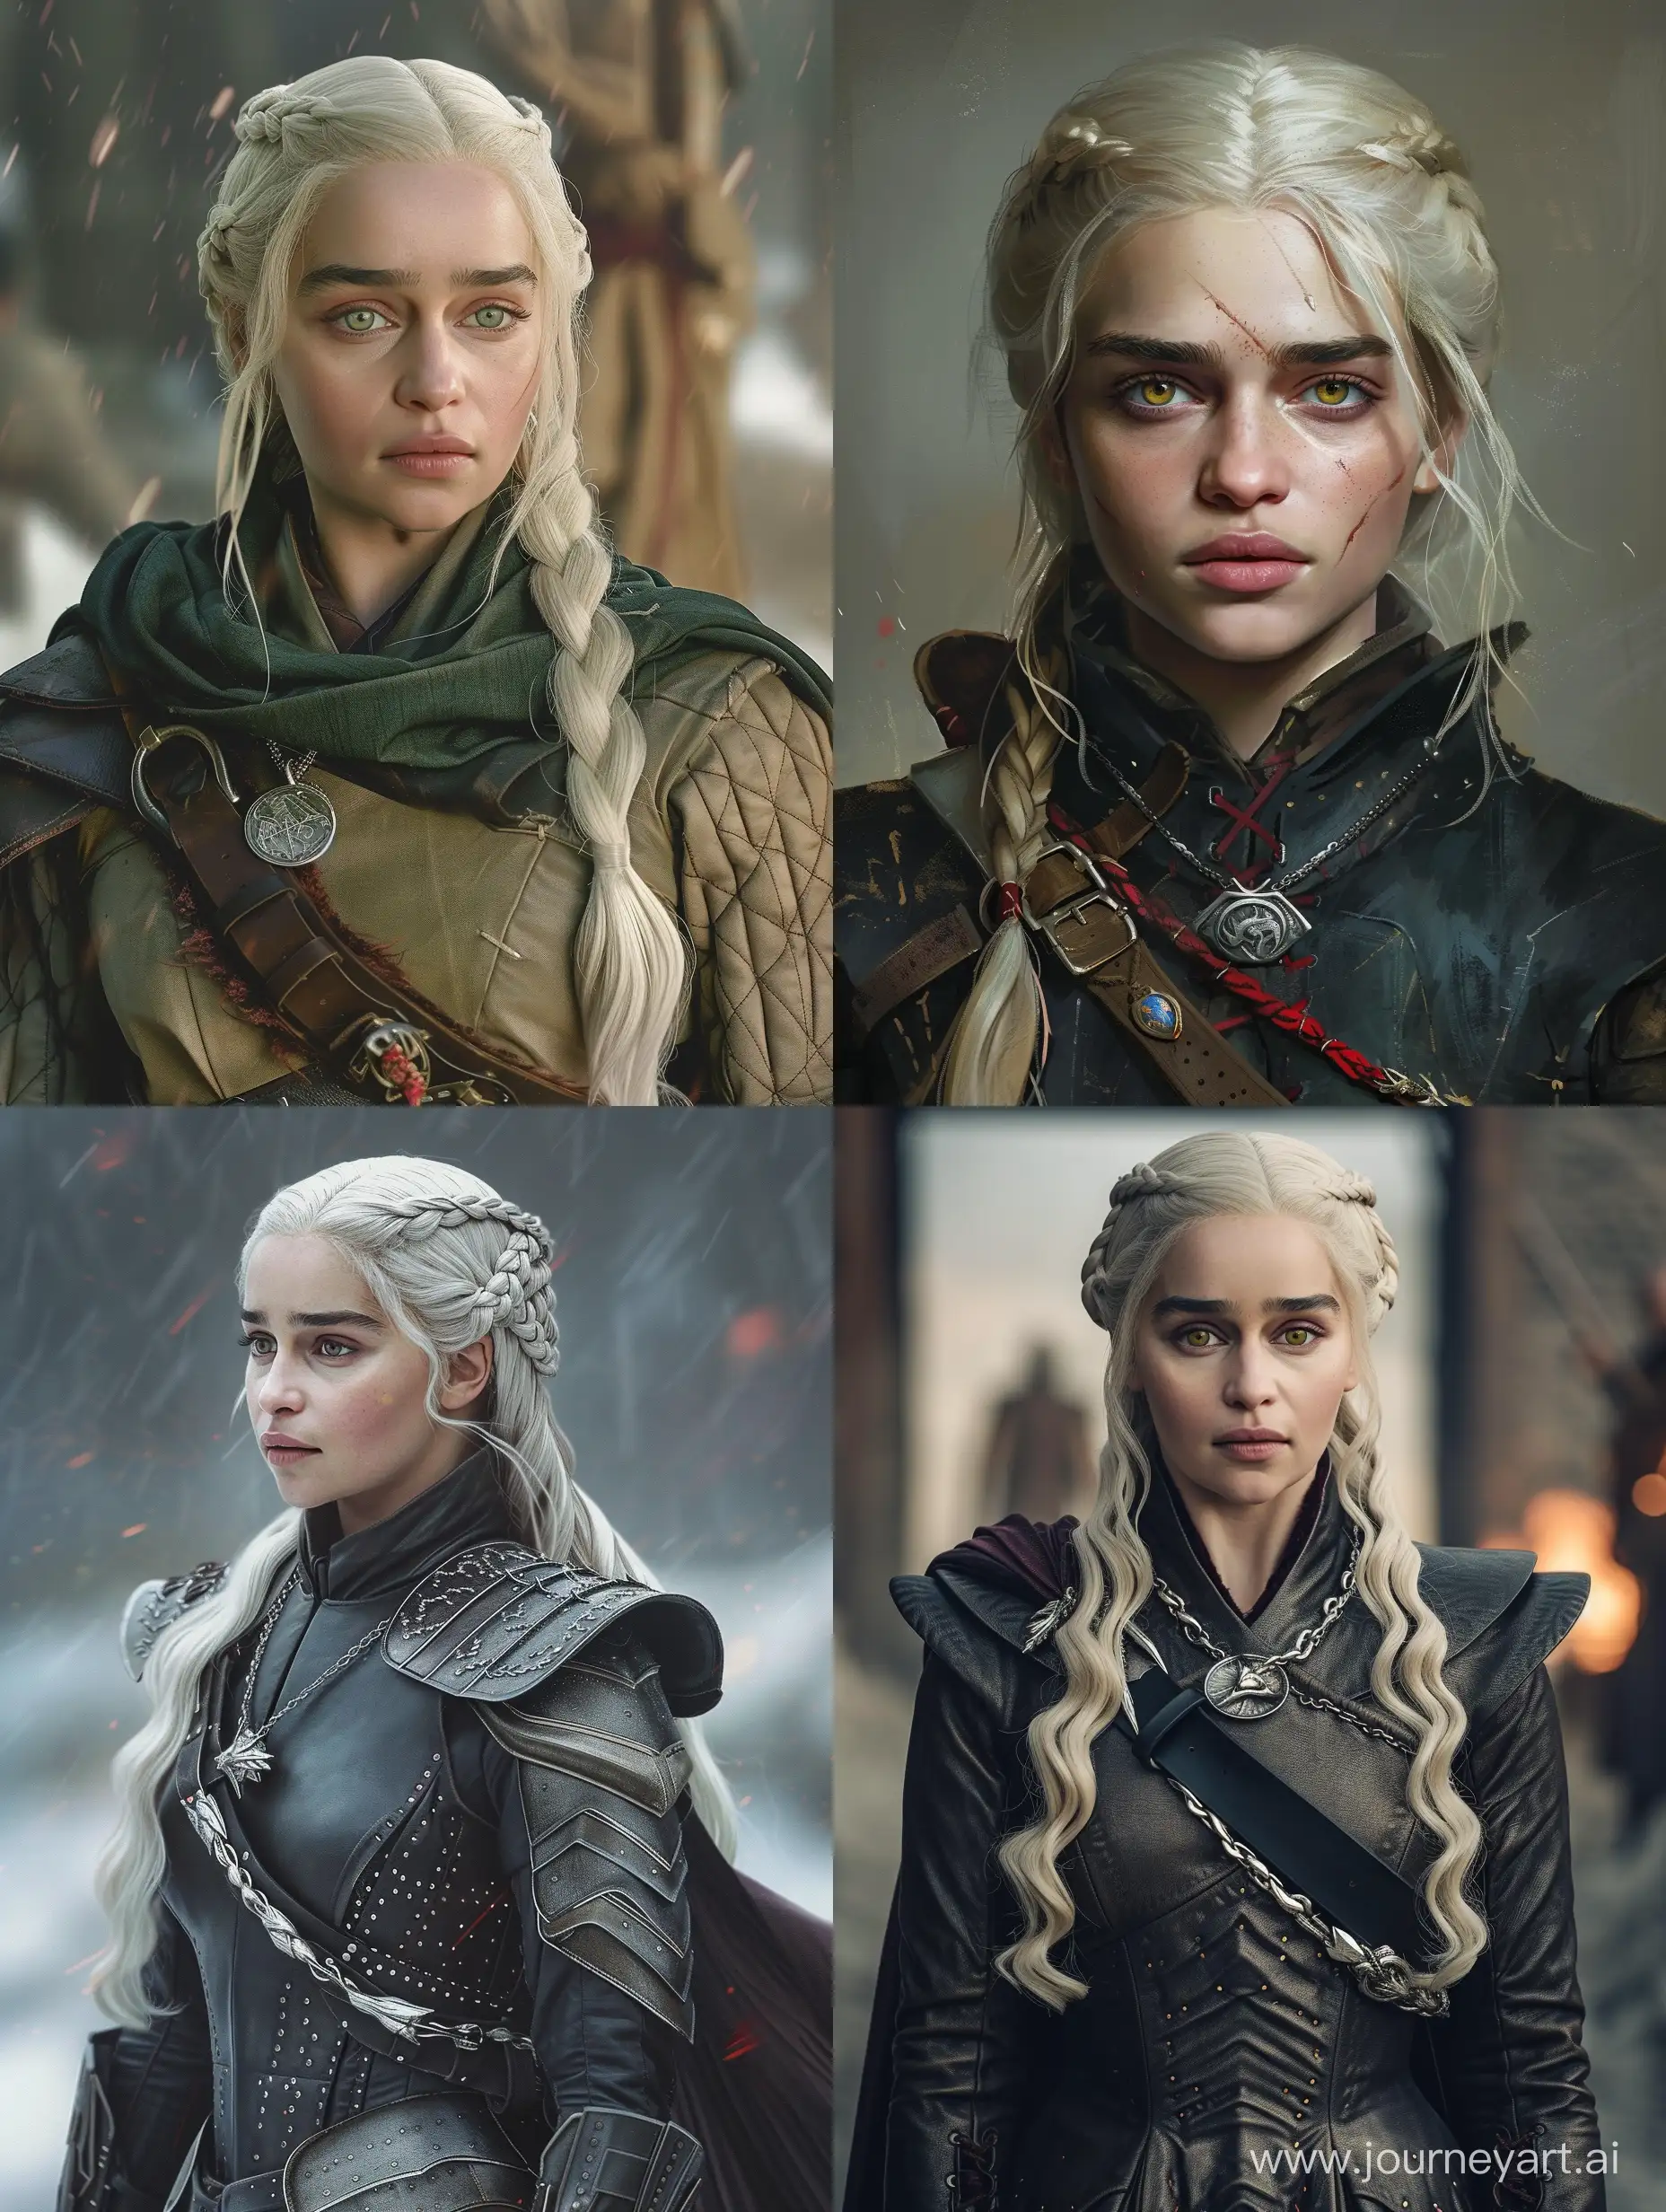 Daenerys Targaryen character as witcher